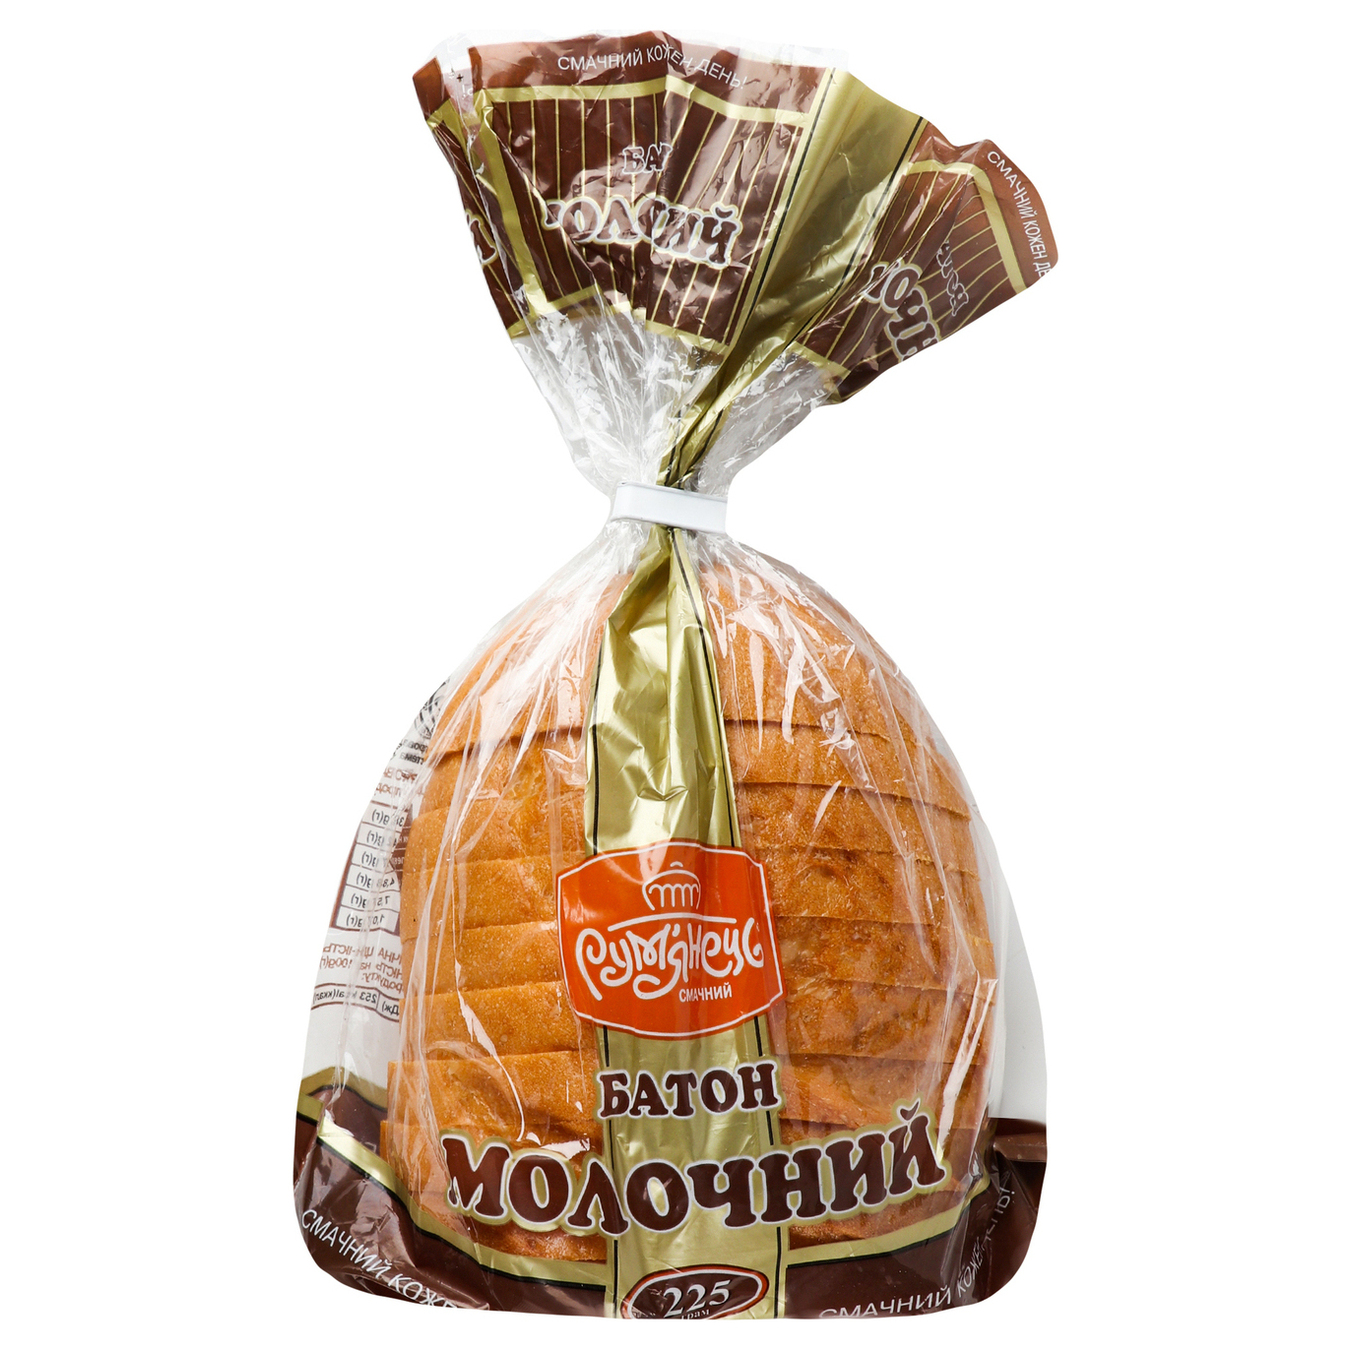 Bread Rumyanets Molochnyi Sliced Half 225g 2